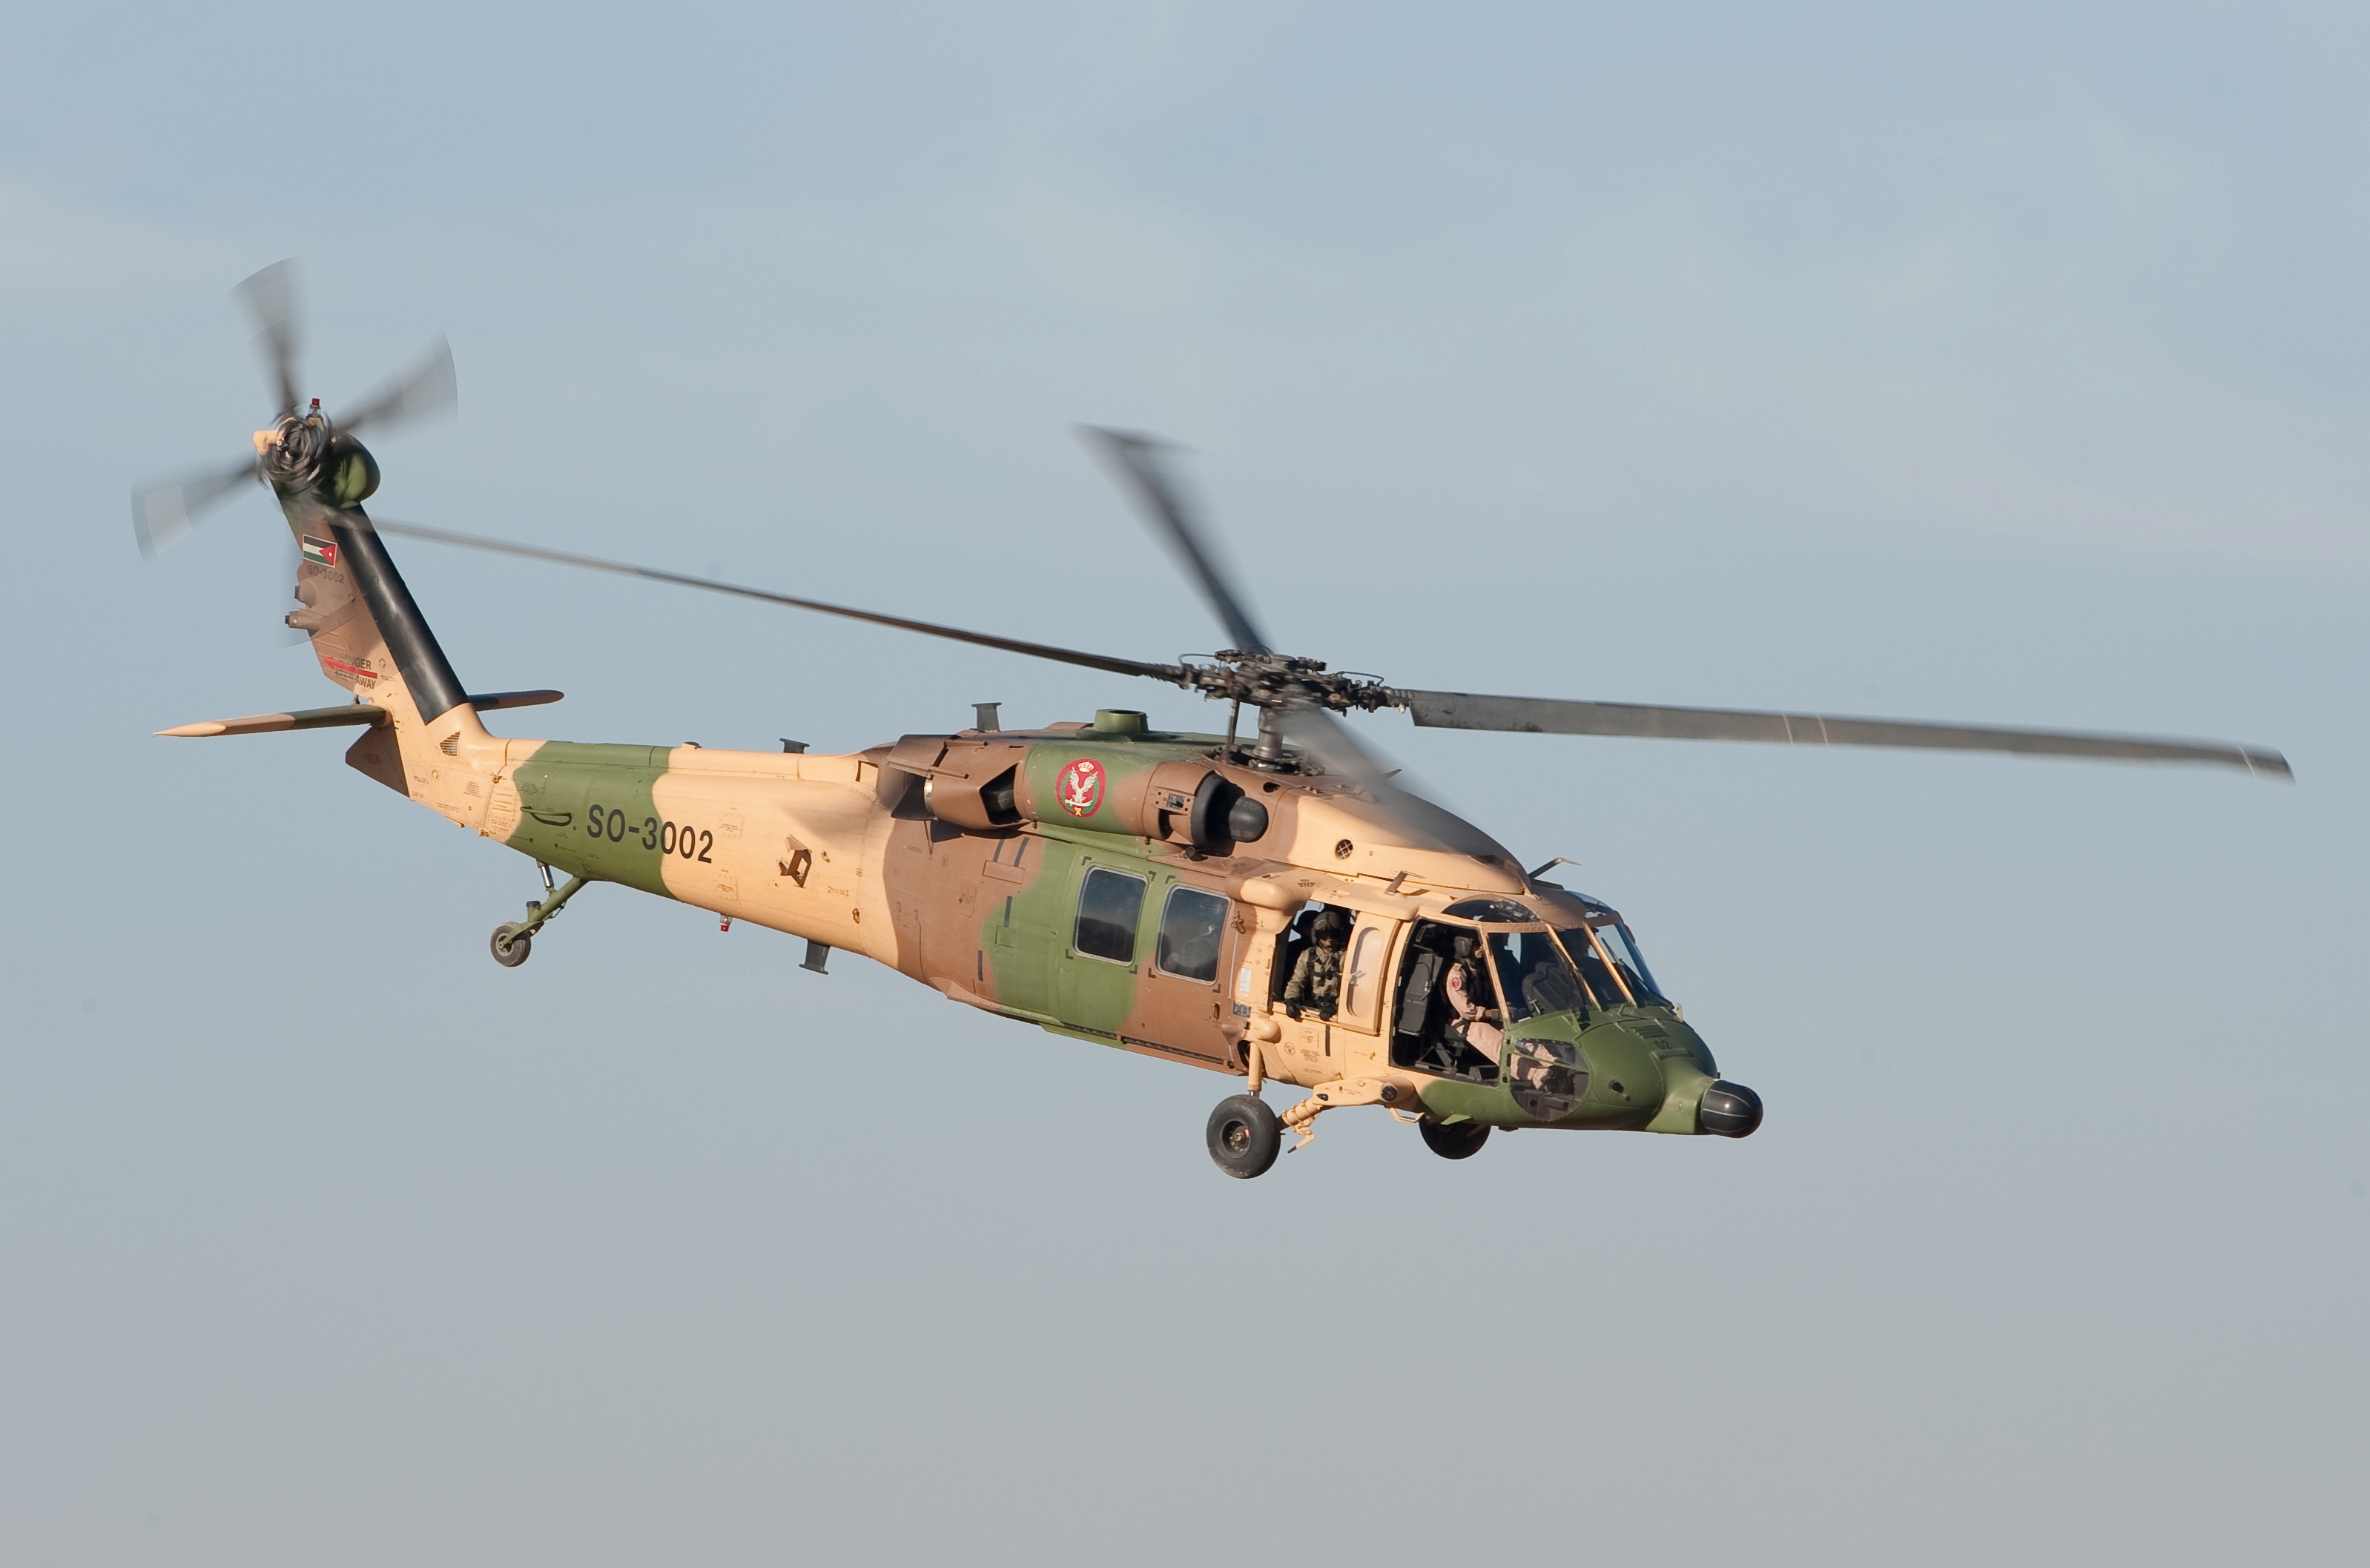 Jordanian Air Force UH-60 Black Hawk helicopter